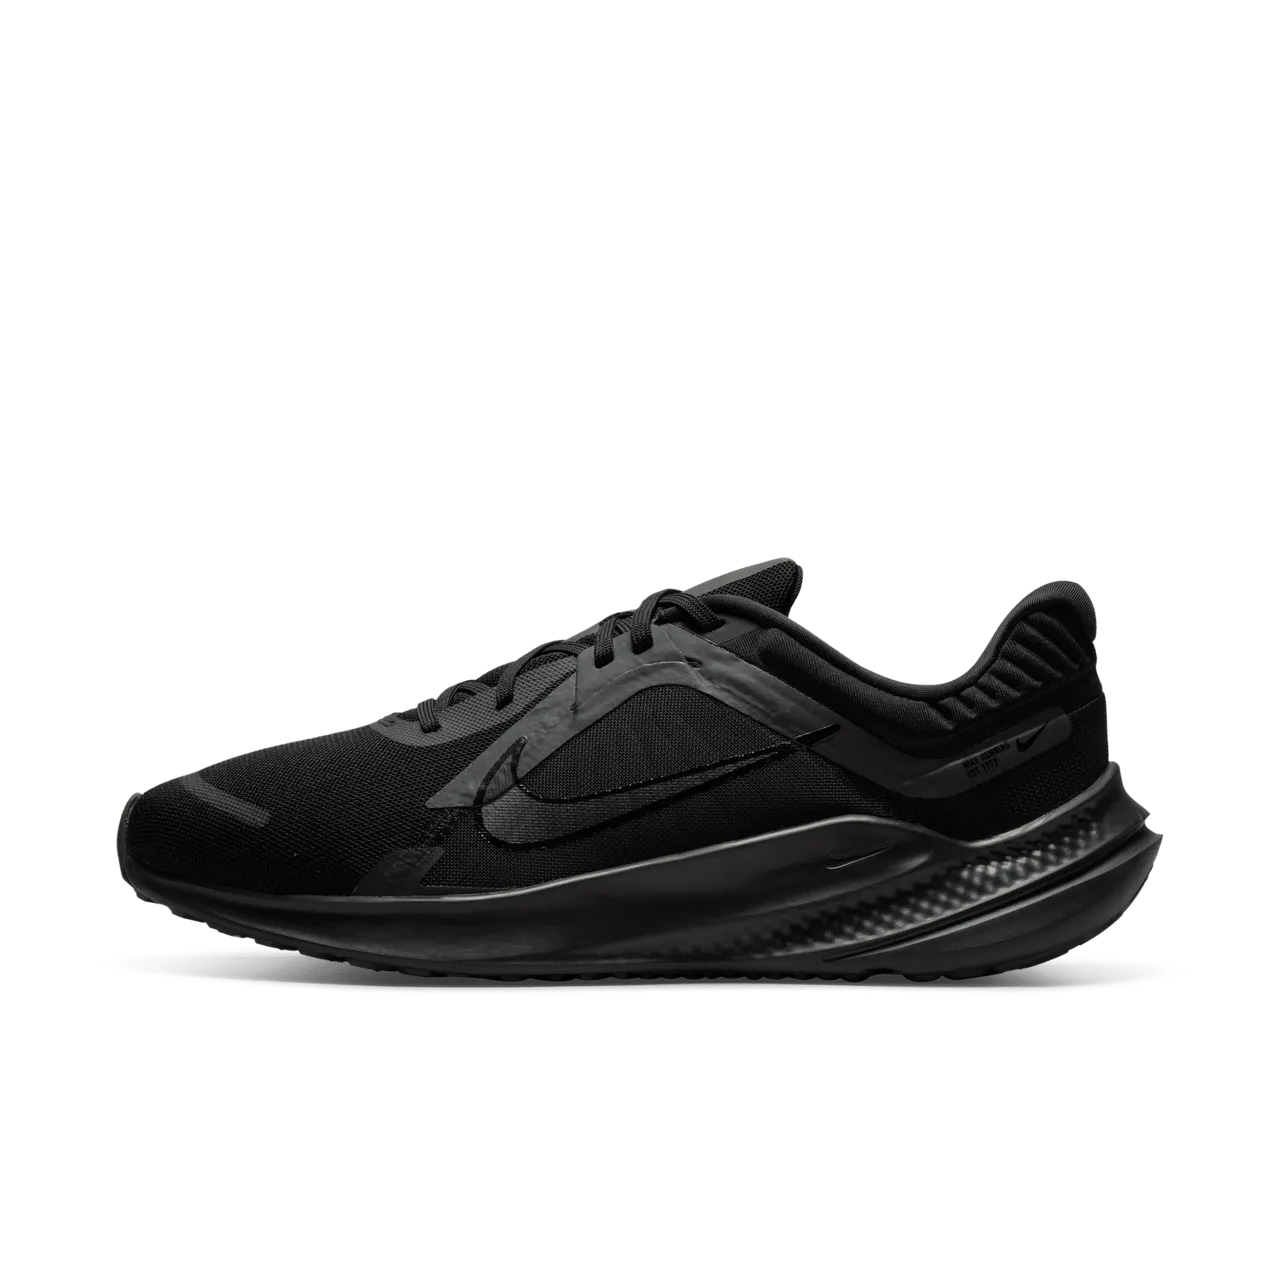 Nike Quest 5 Men's Road Running Shoes - Black